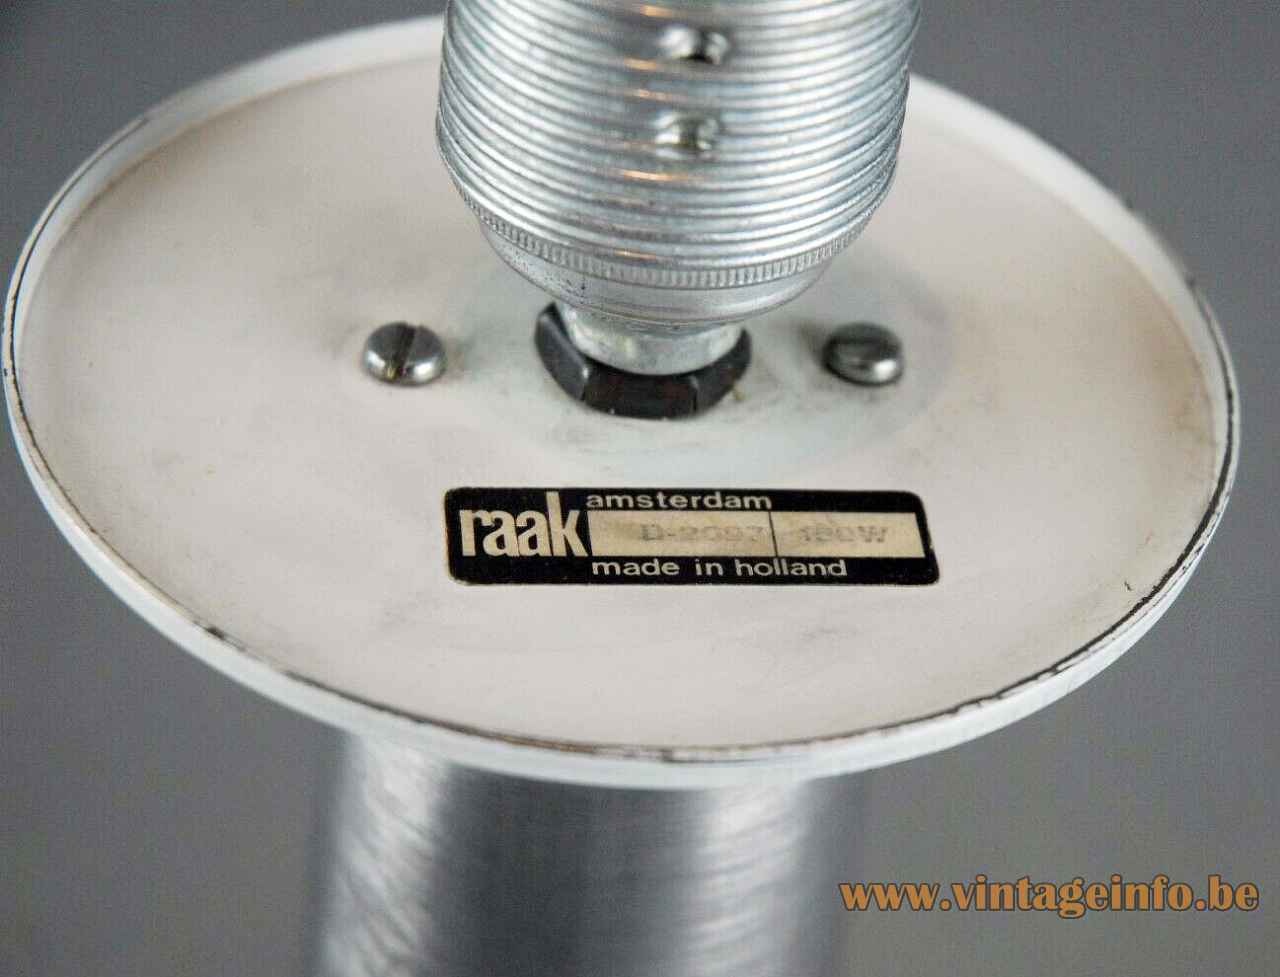 Raak Bazuin table lamp D-2097 label & logo maximum 100 Watt 1960s 1970s The Netherlands E27 socket